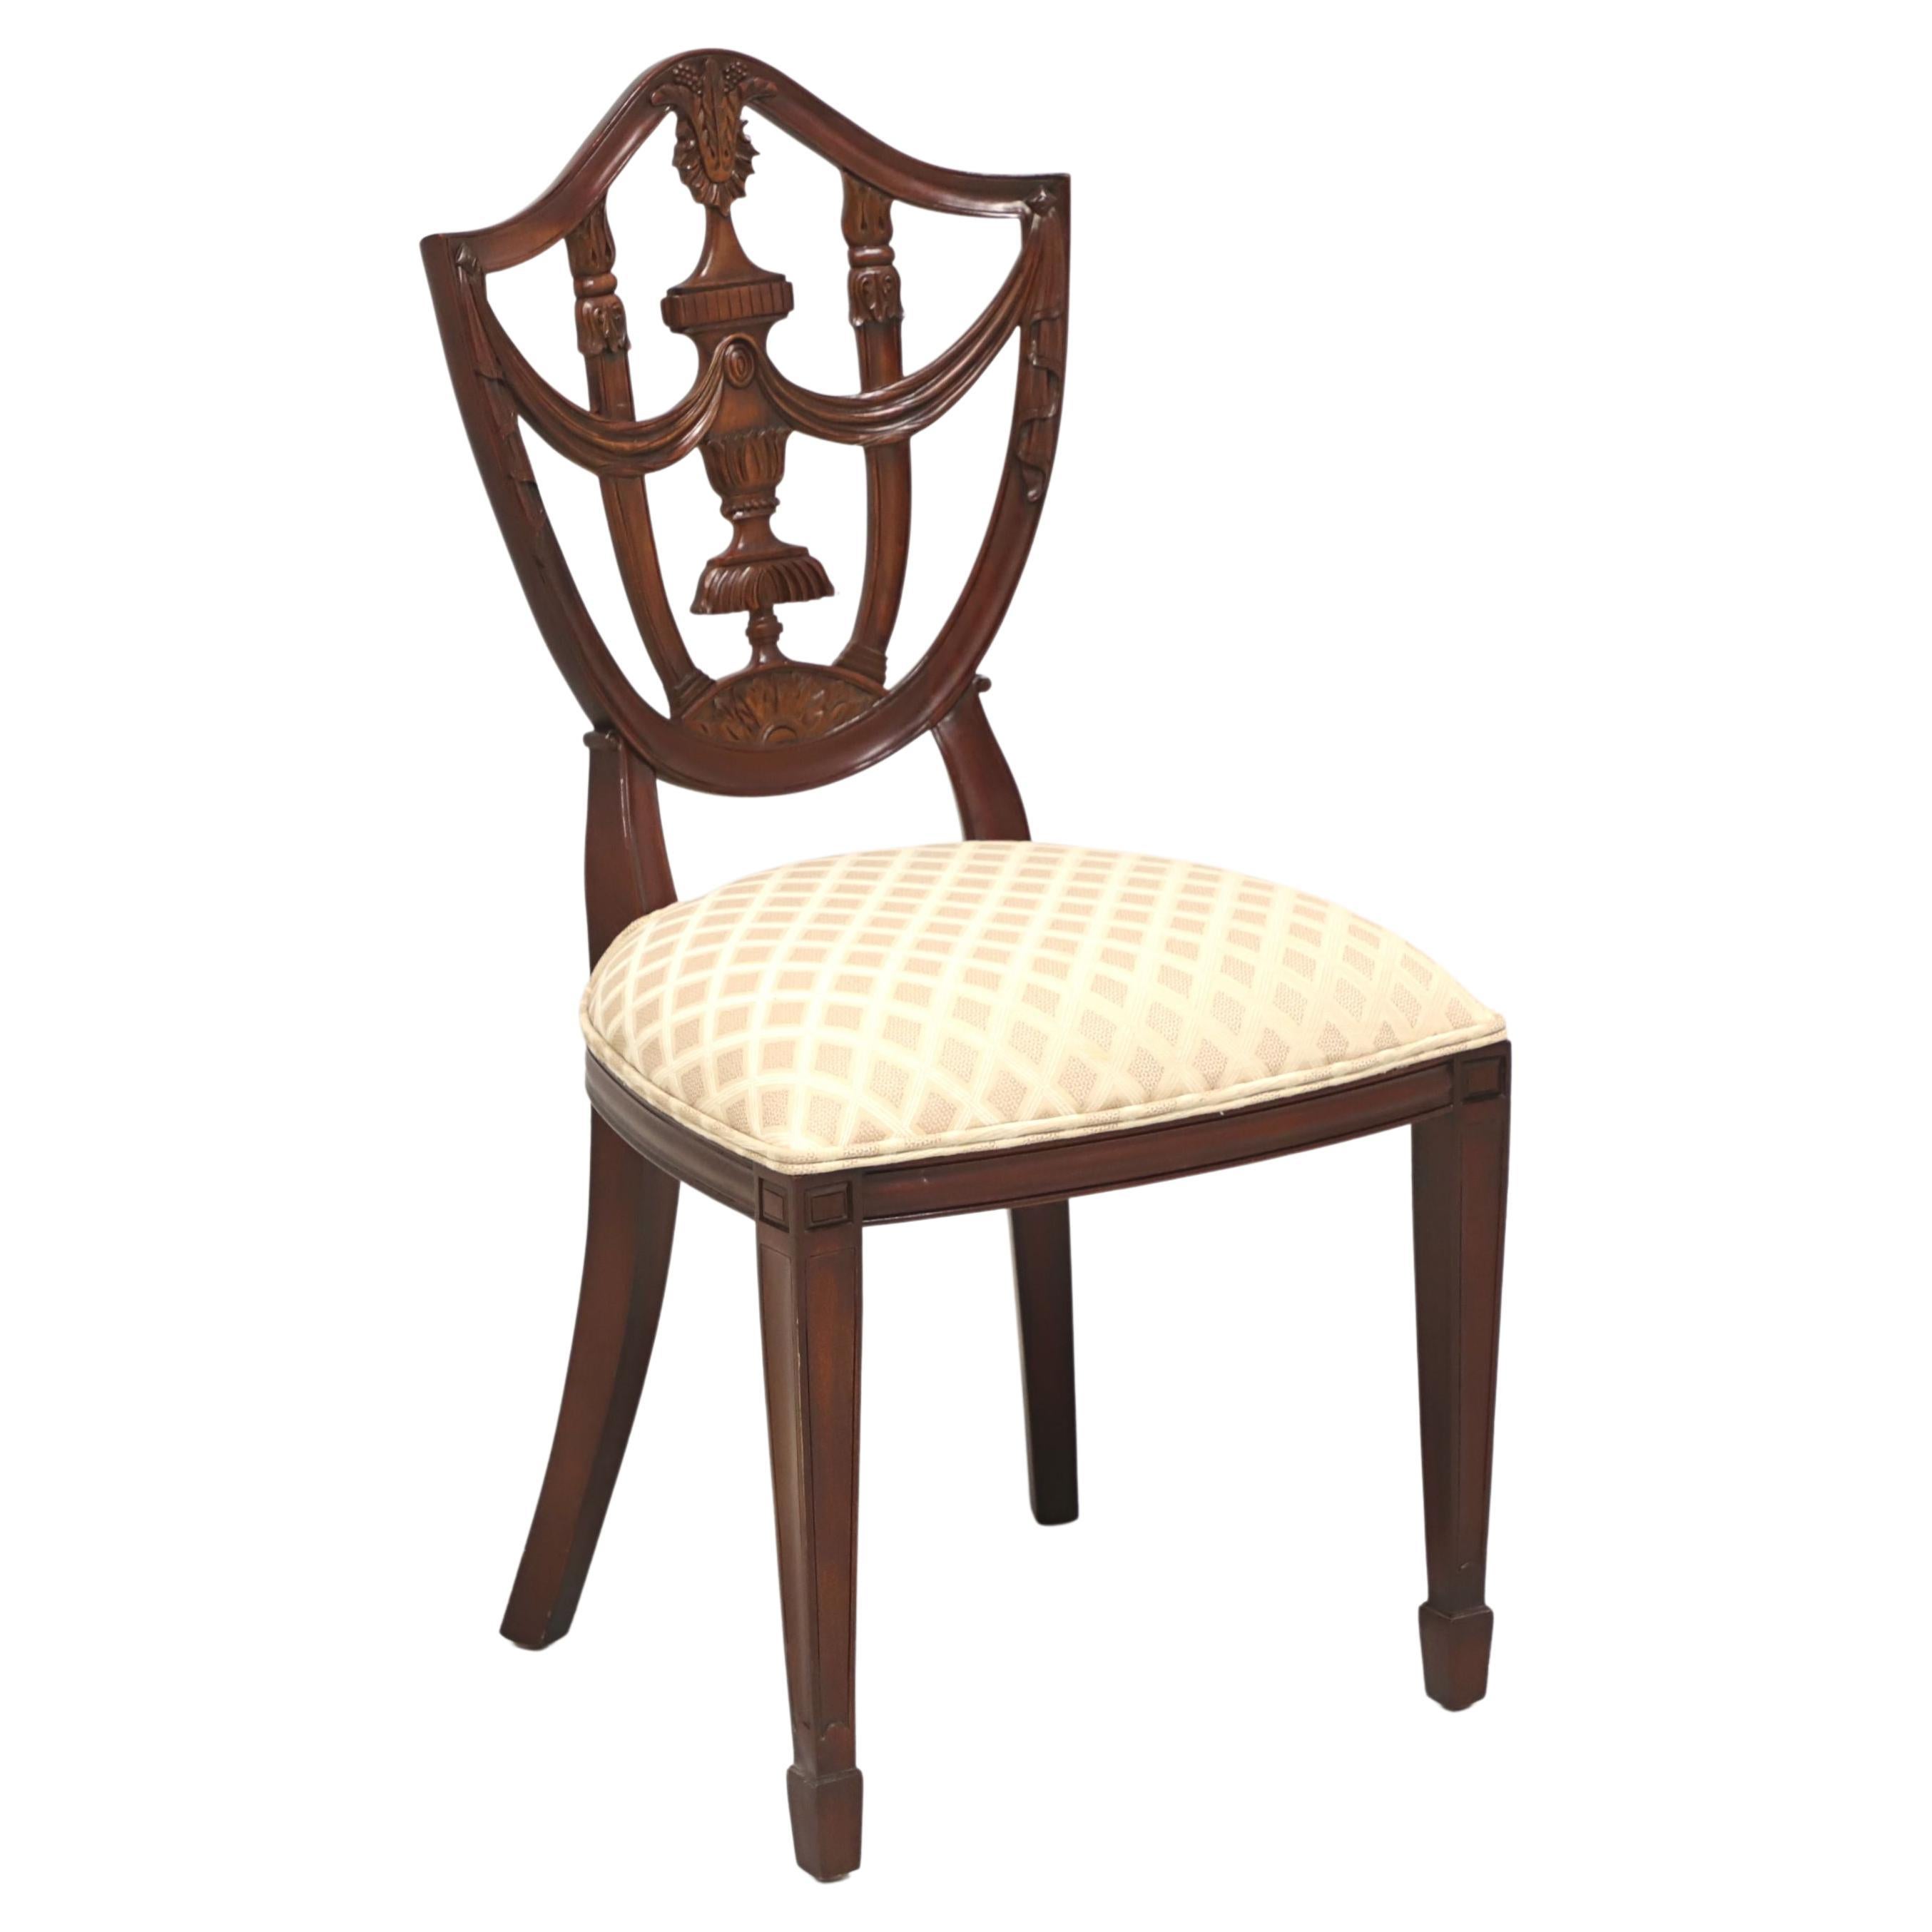 MAITLAND SMITH Mahogany Hepplewhite Style Dining Side Chair